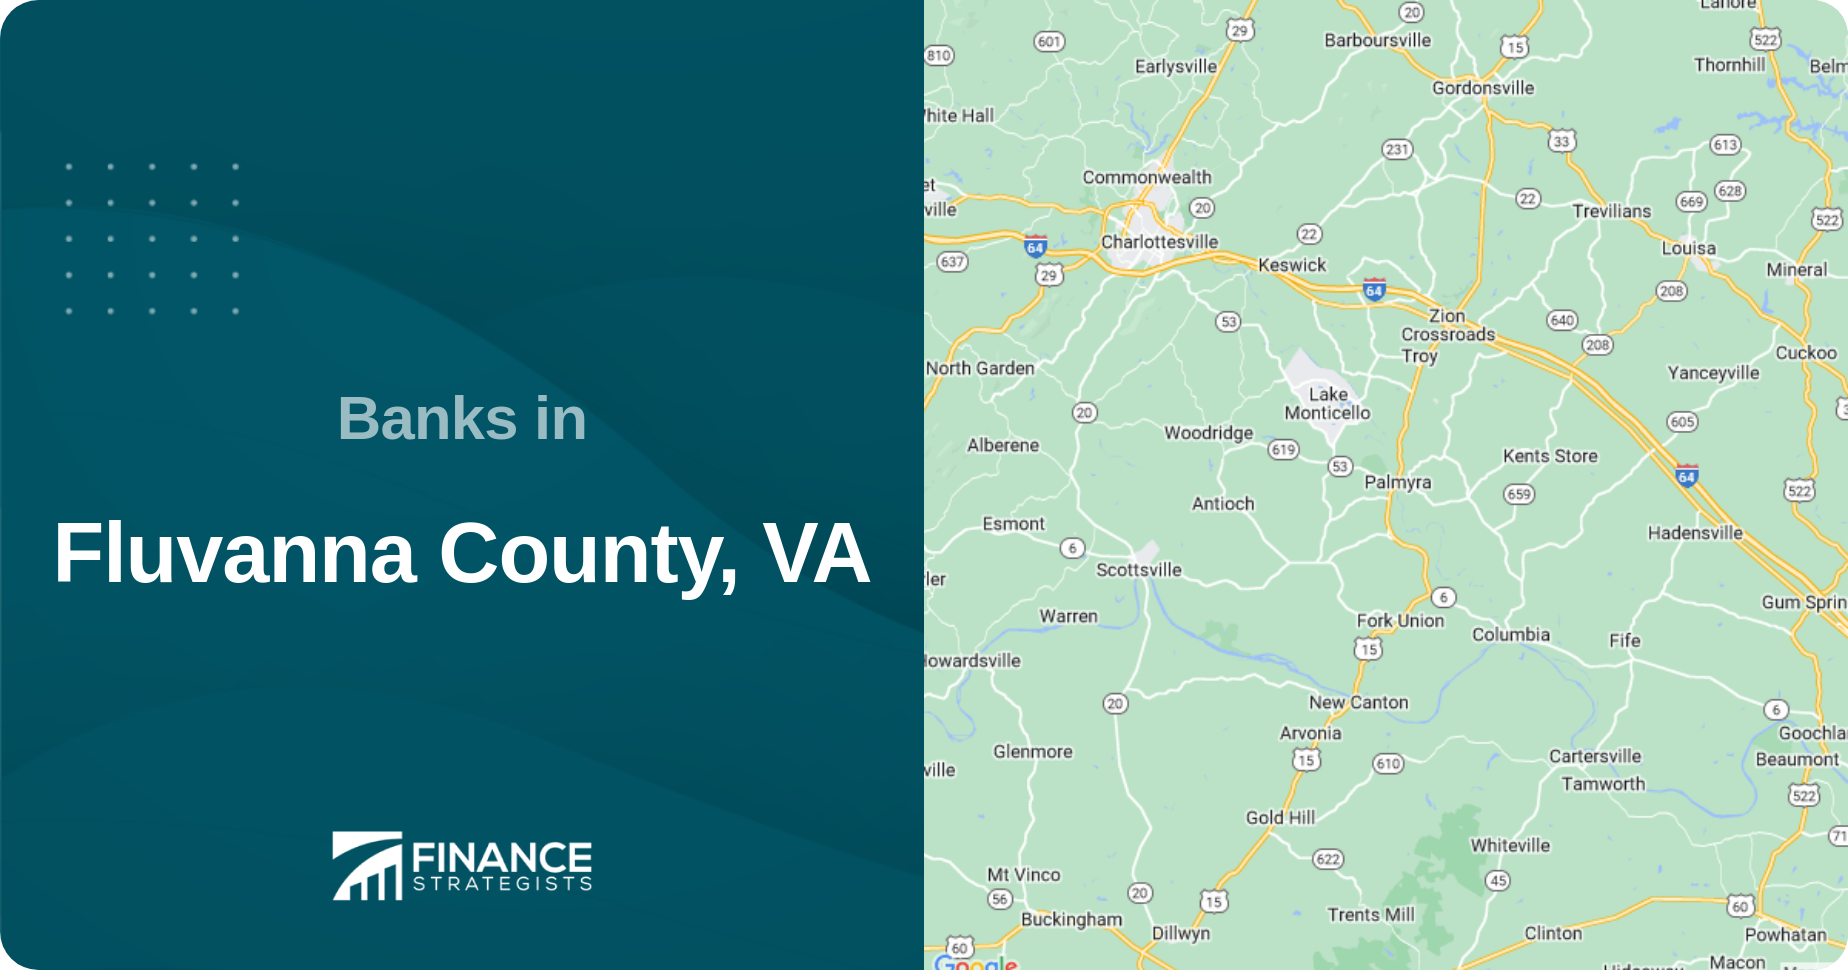 Banks in Fluvanna County, VA